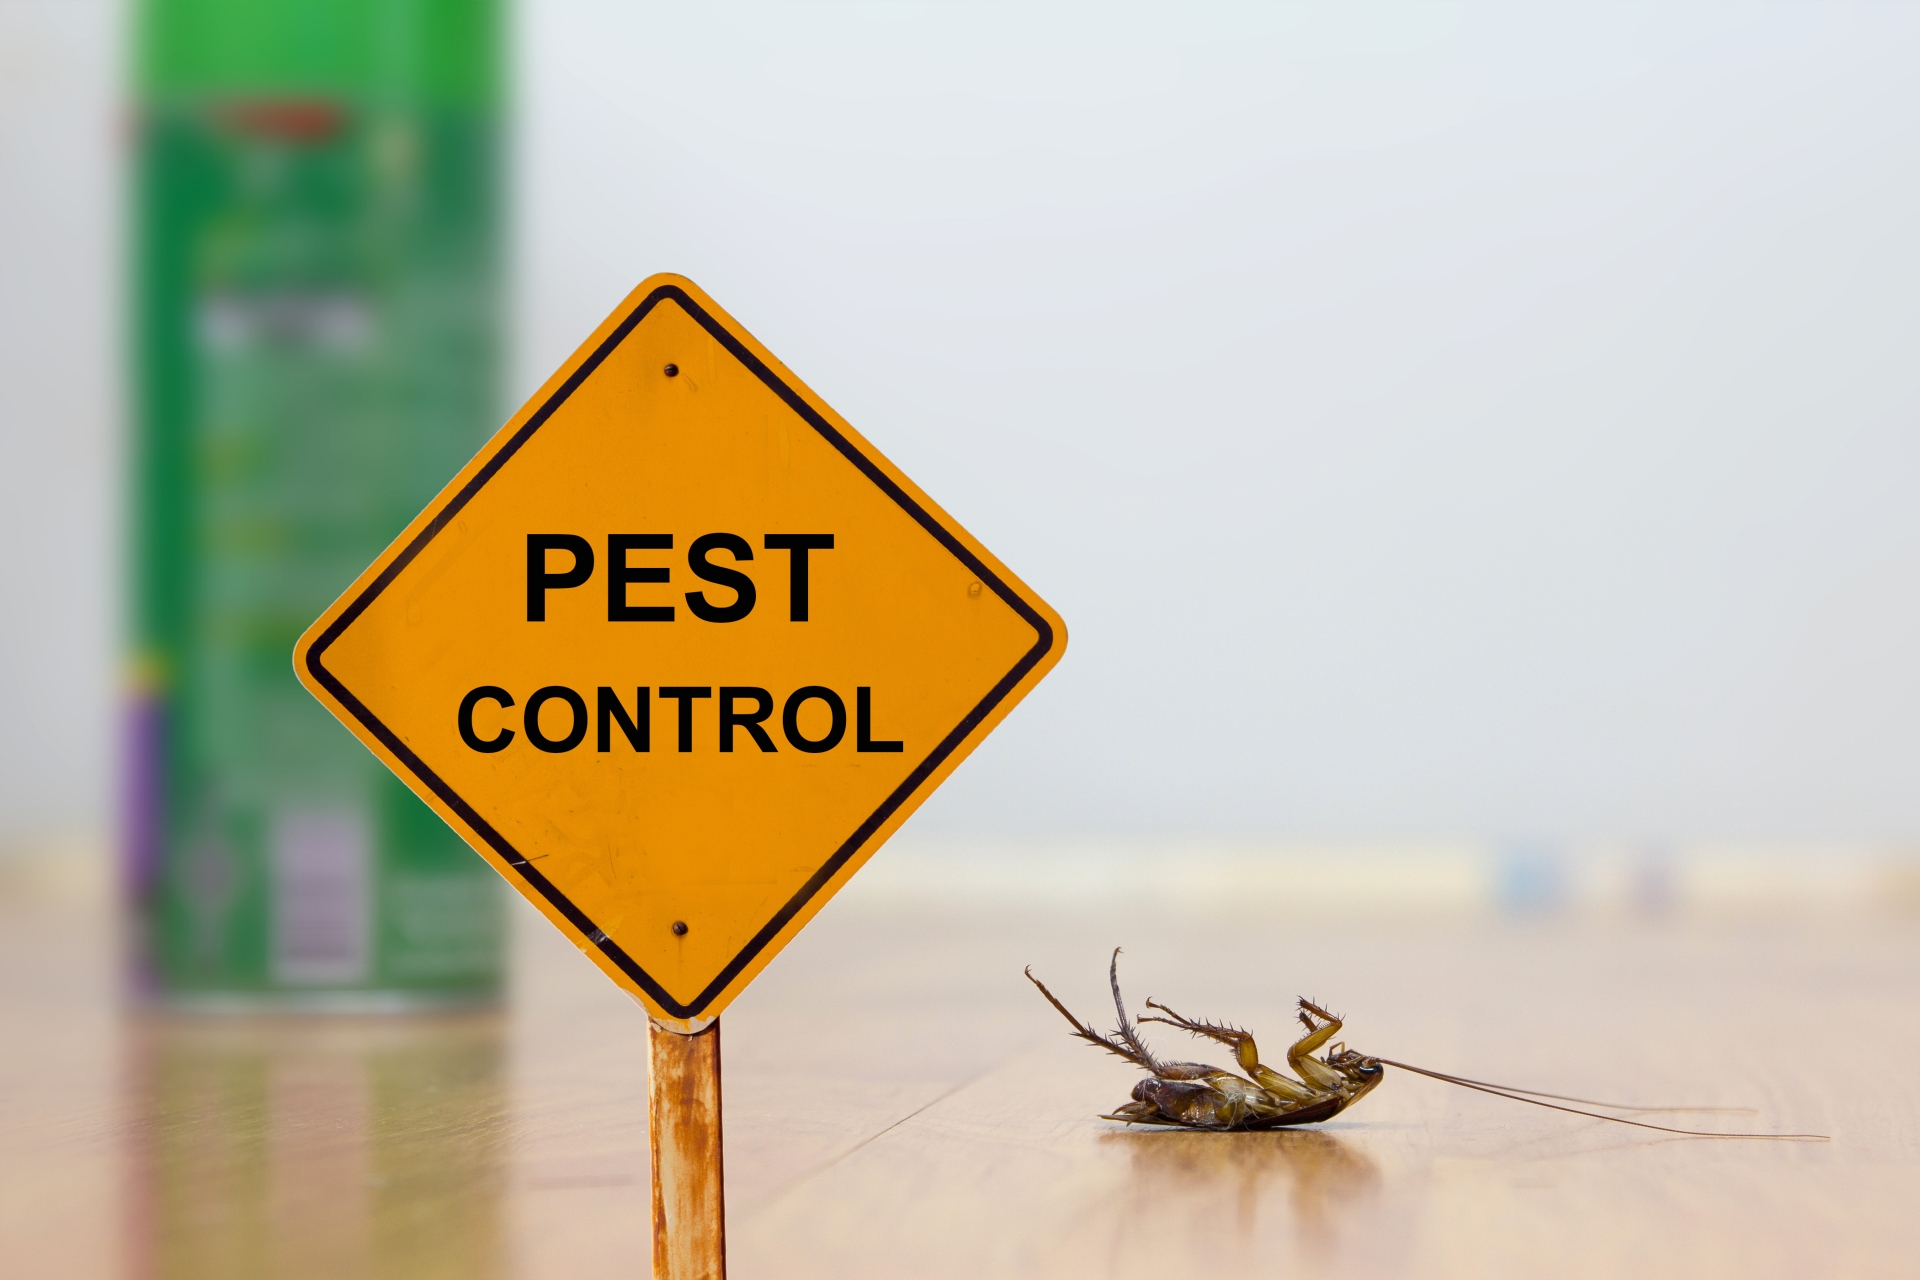 24 Hour Pest Control, Pest Control in Islington, Barnsbury, Canonbury, N1. Call Now 020 8166 9746